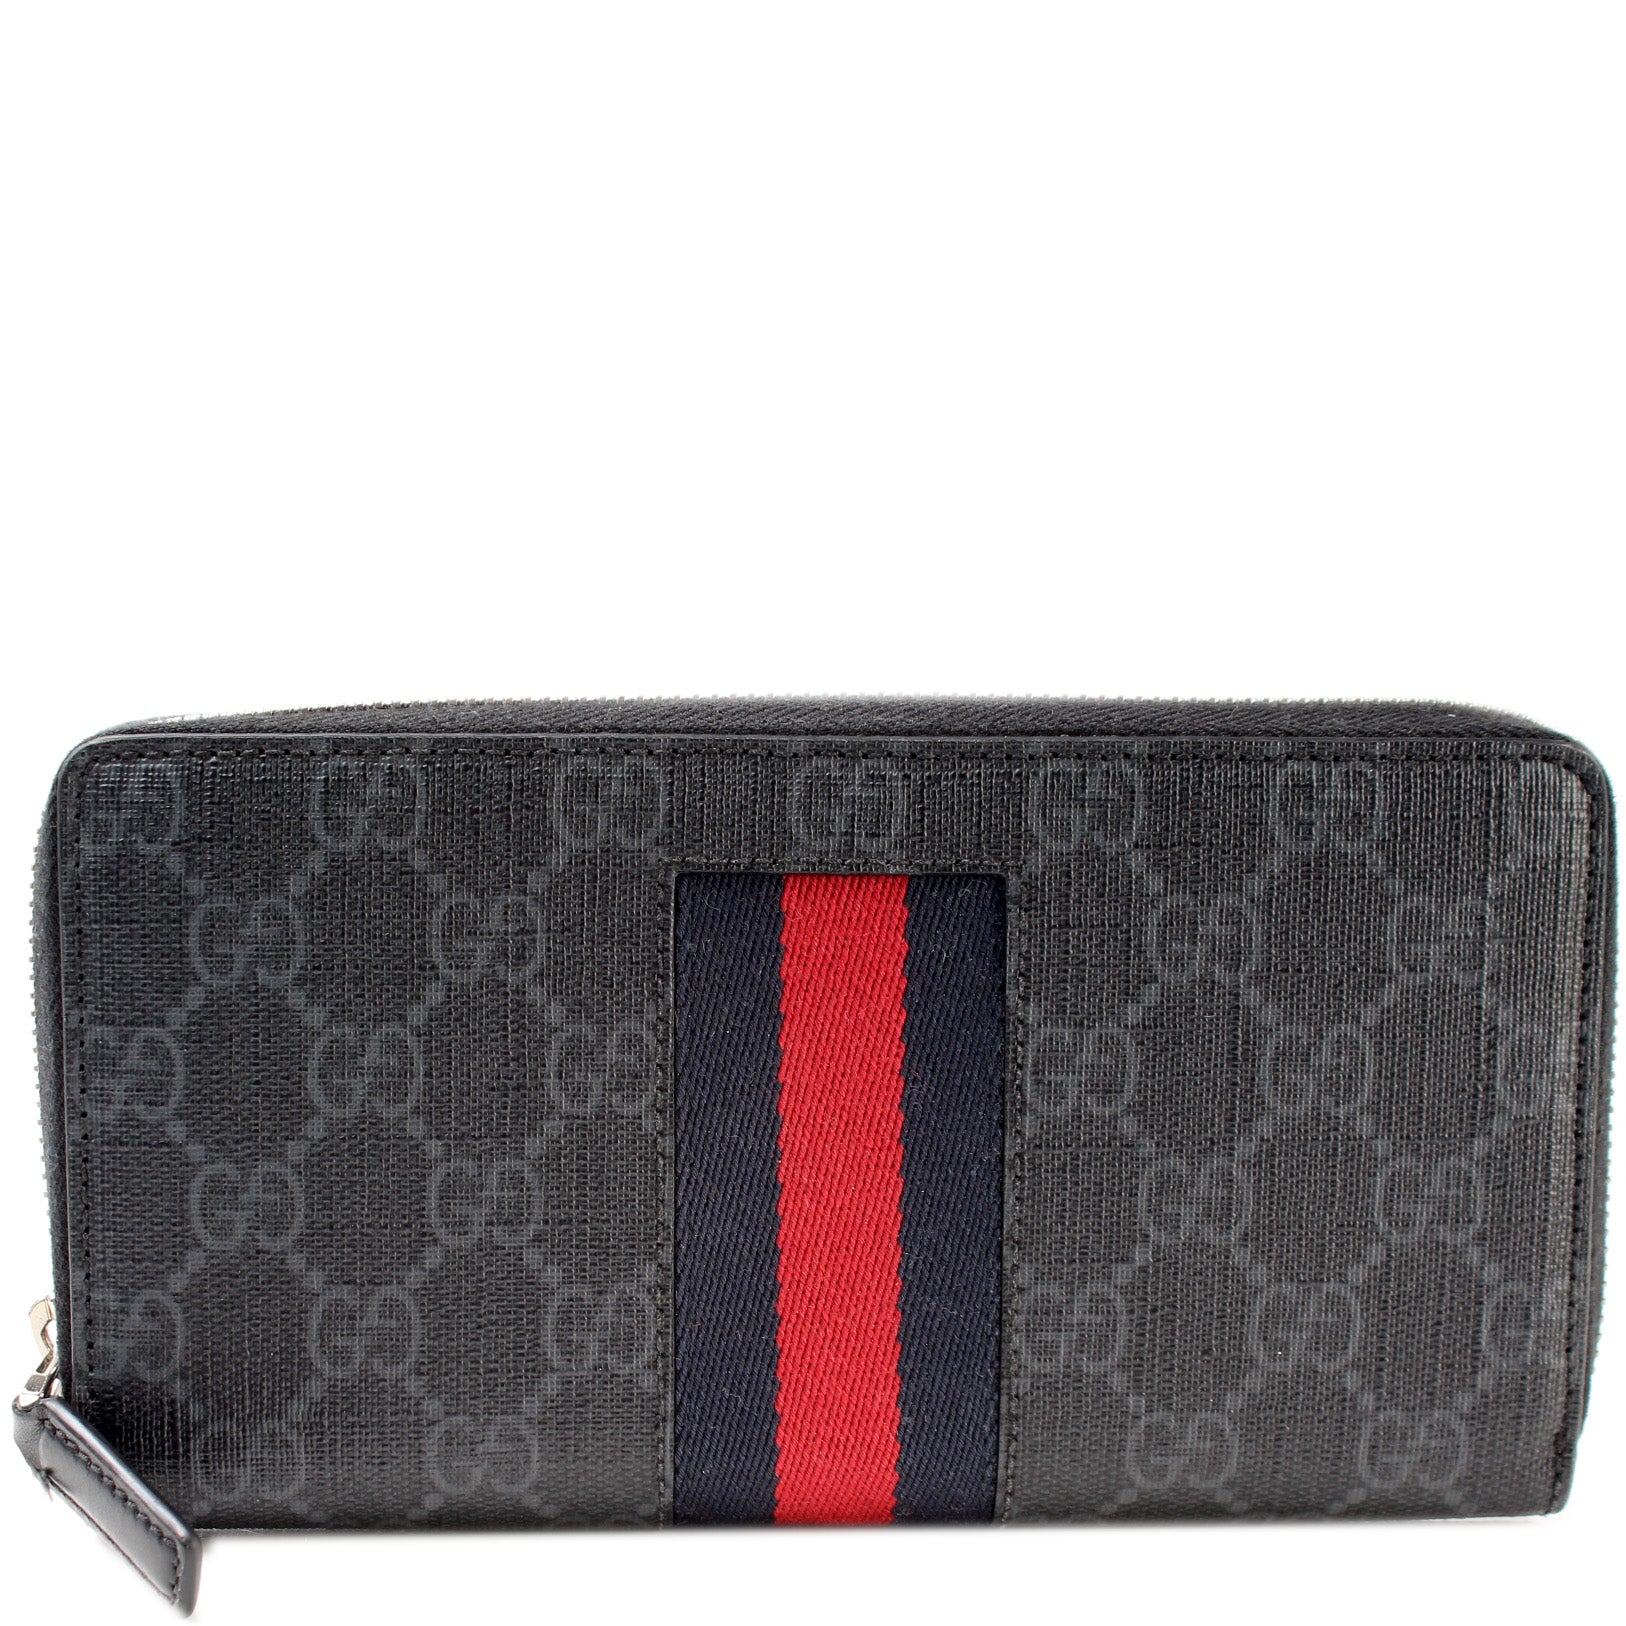 Gucci GG Supreme zip around wallet  Zip around wallet, Real leather wallet,  Bags